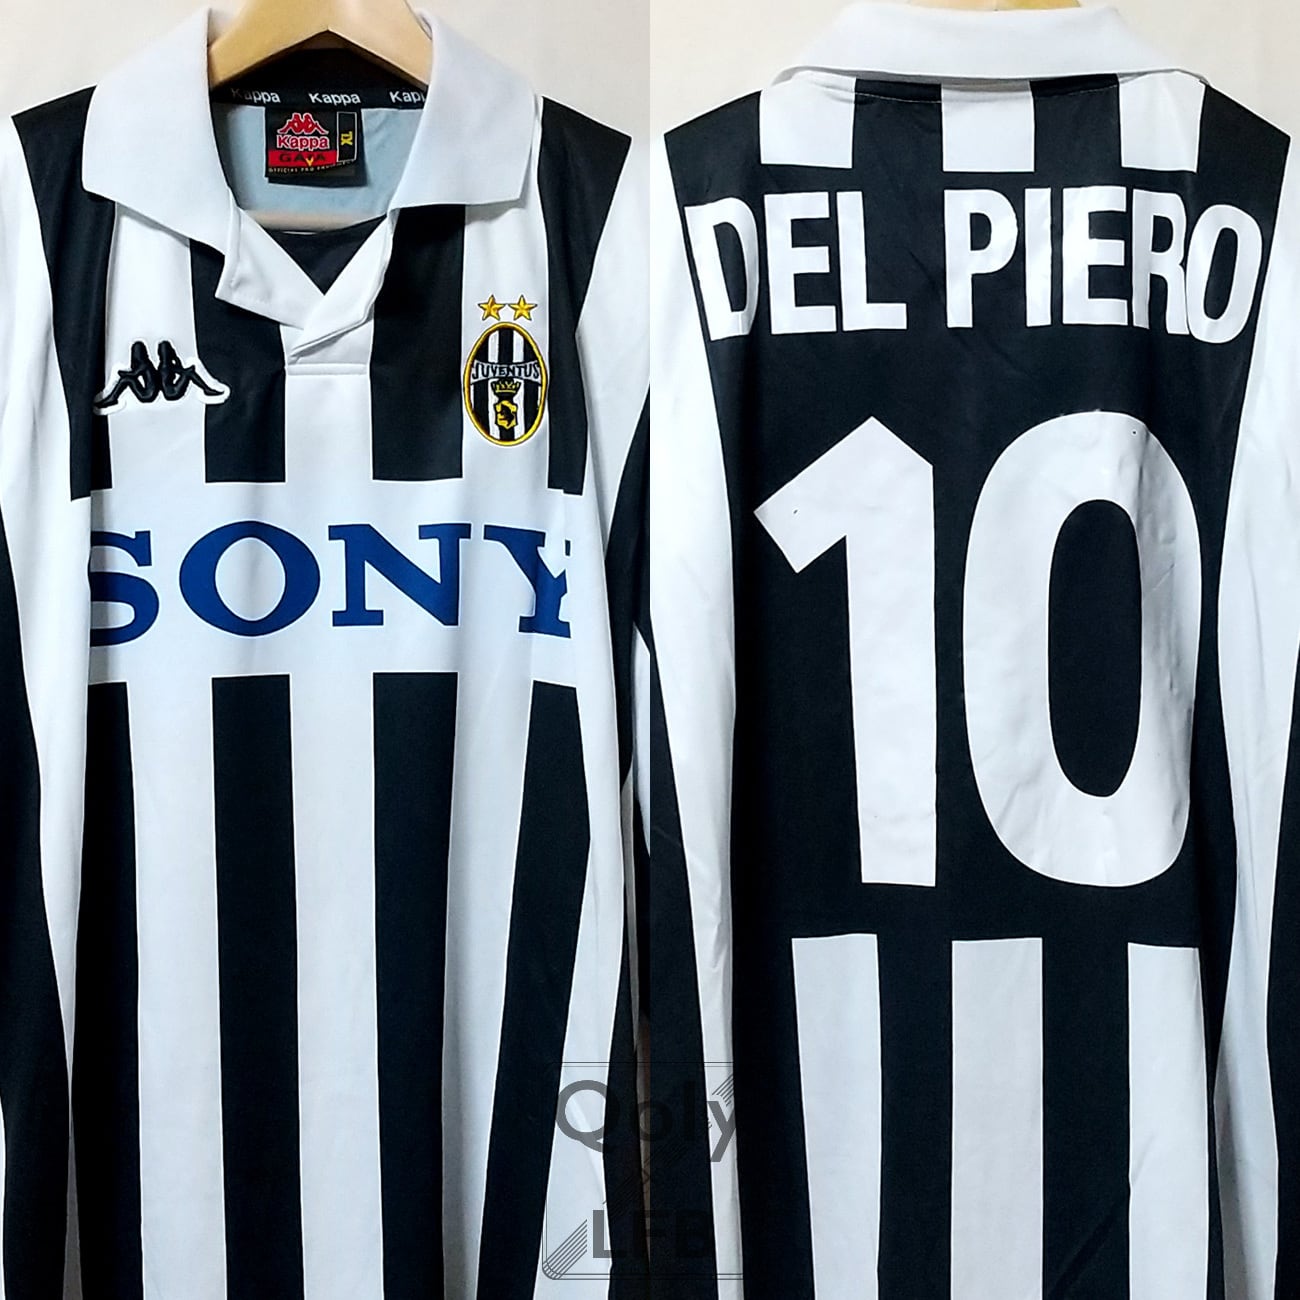 90s DEL PIERO イタリア代表ユニフォーム 7 イタリア製